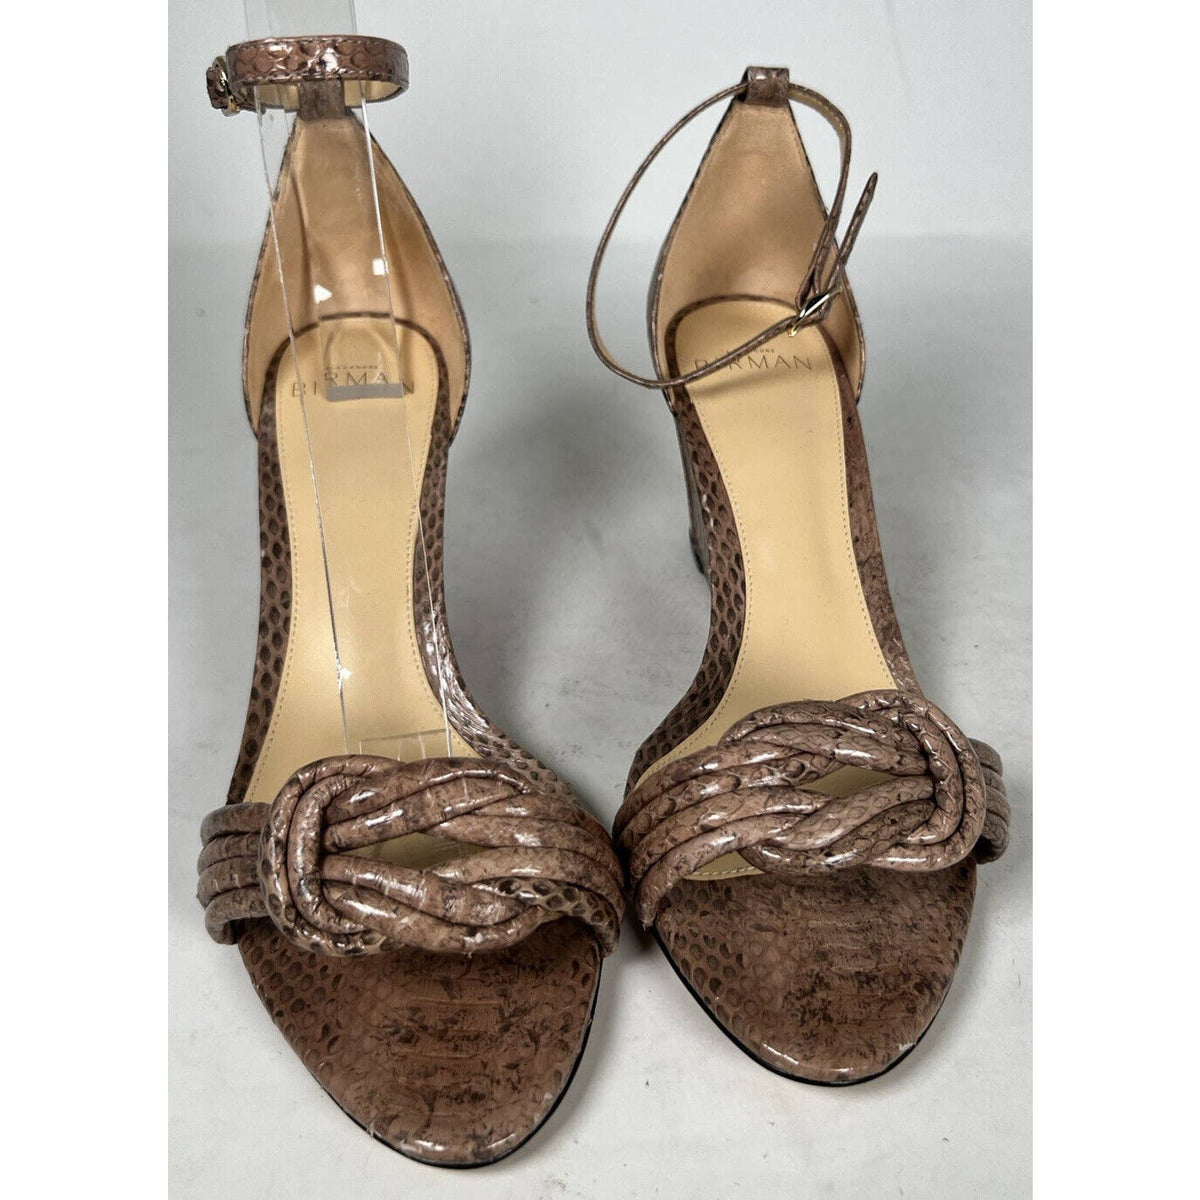 Alexandre Birman Vicky Python Leather Wedge Sandals Sz.7 (37) NEW